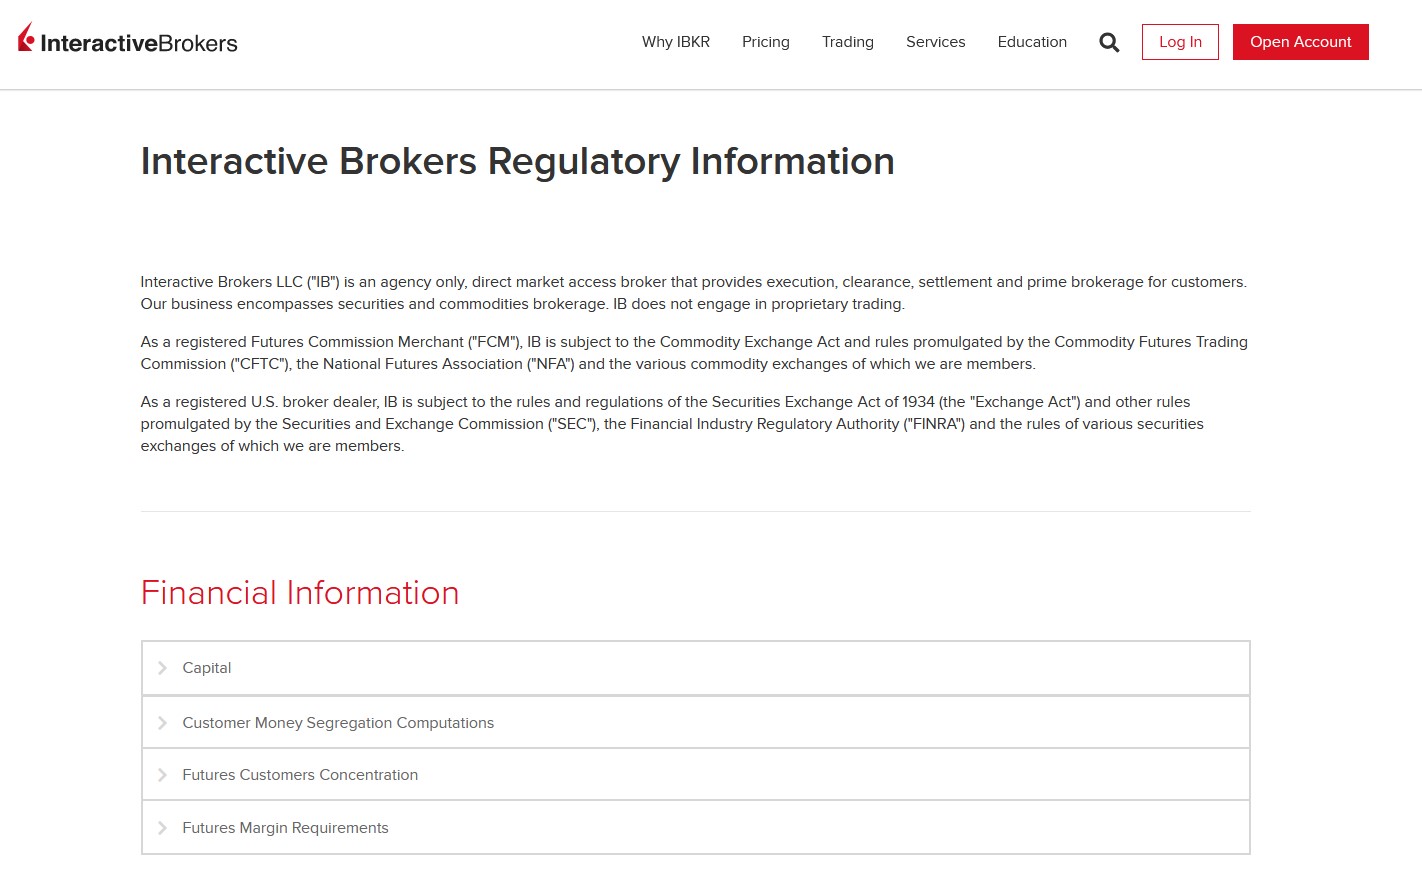 Photo: Interactive Brokers regulatory information